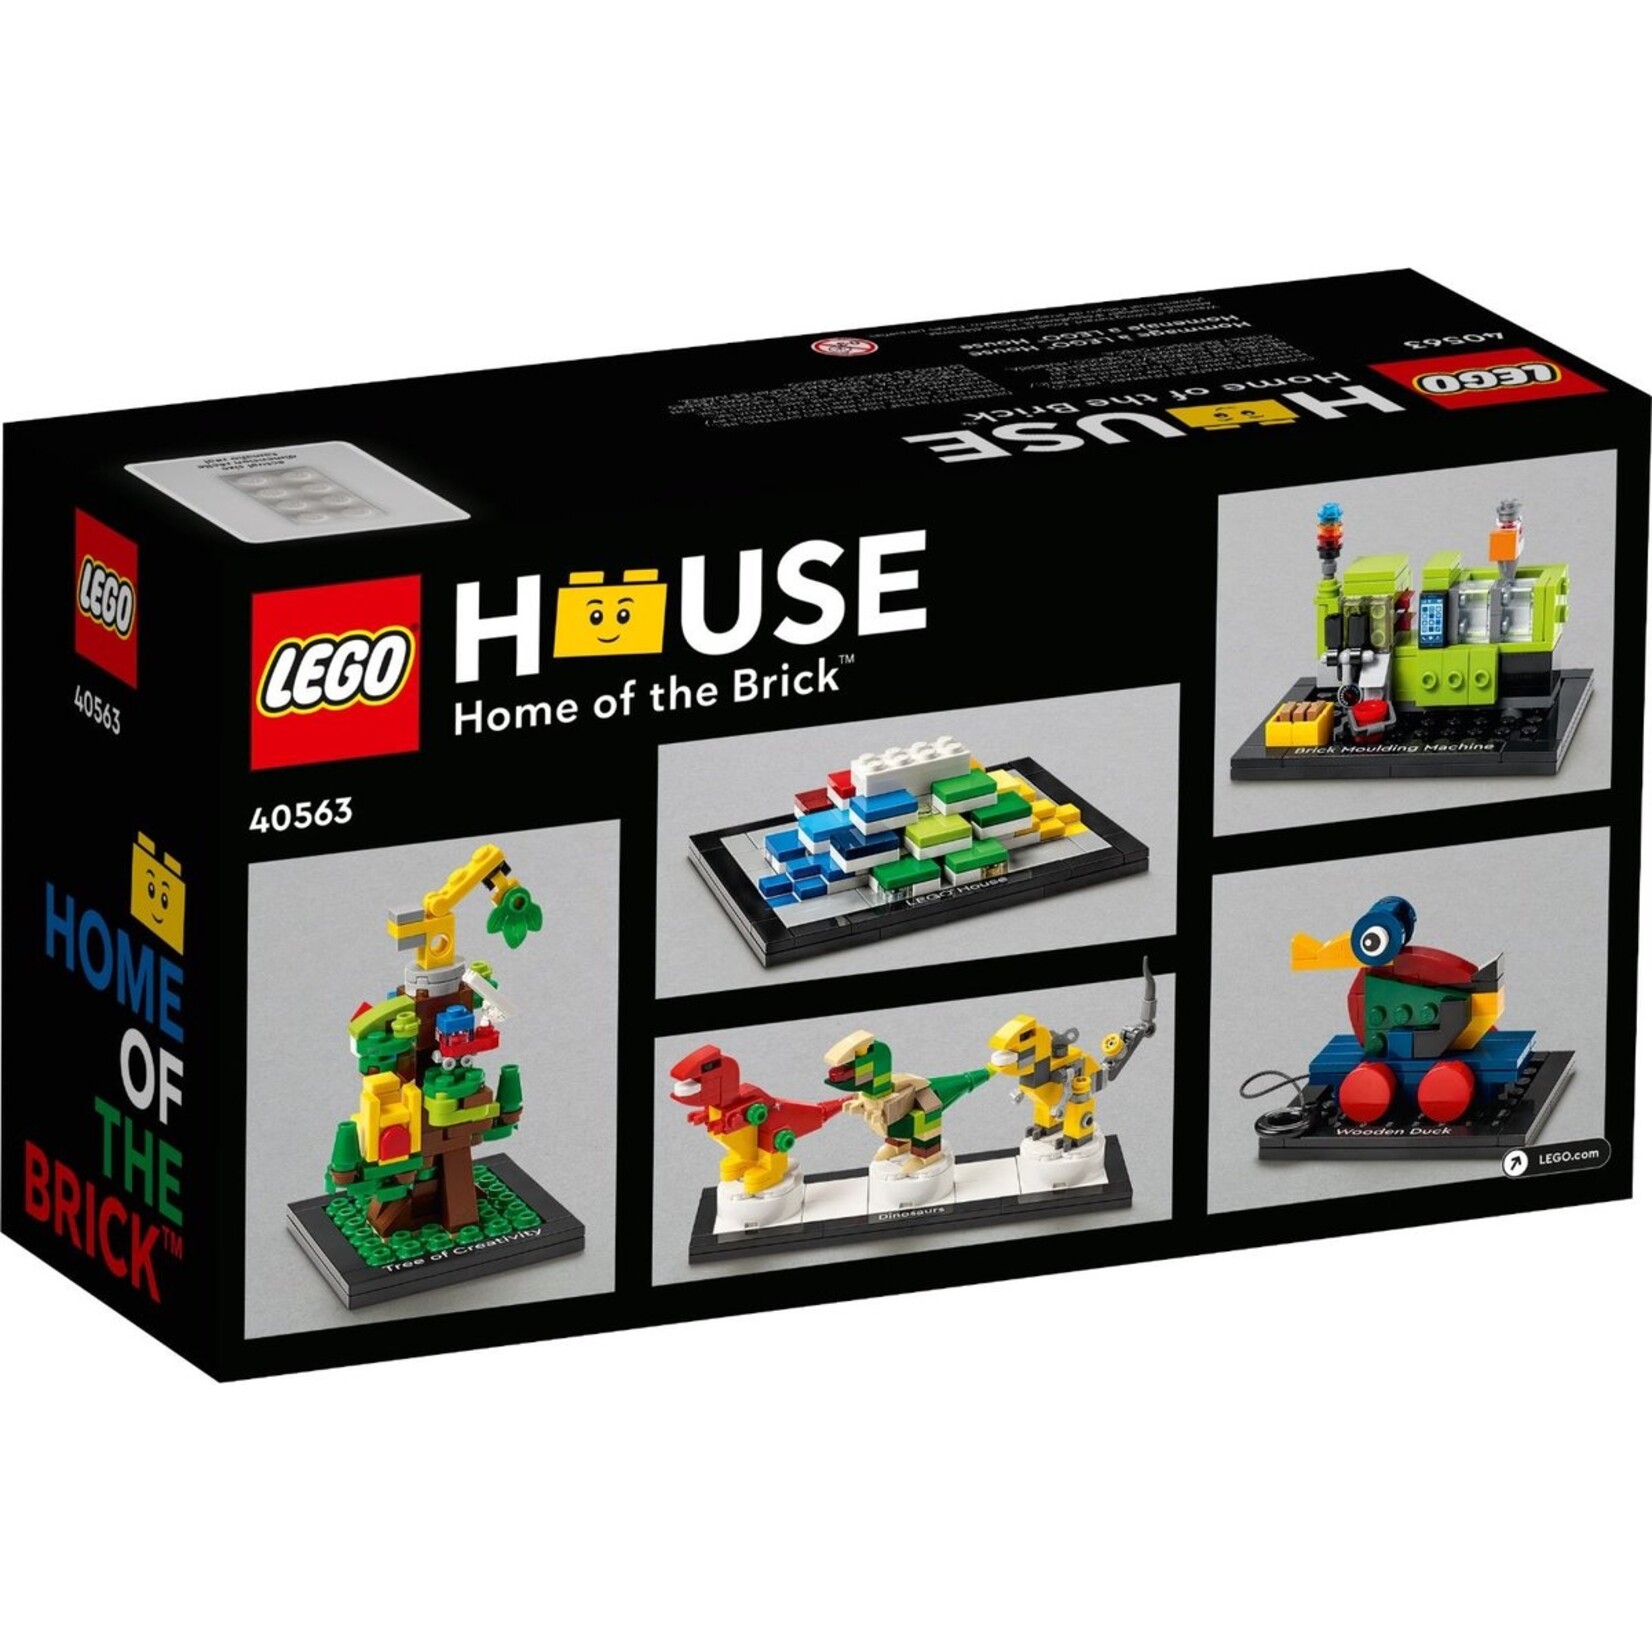 LEGO LEGO - Tribute to the LEGO House